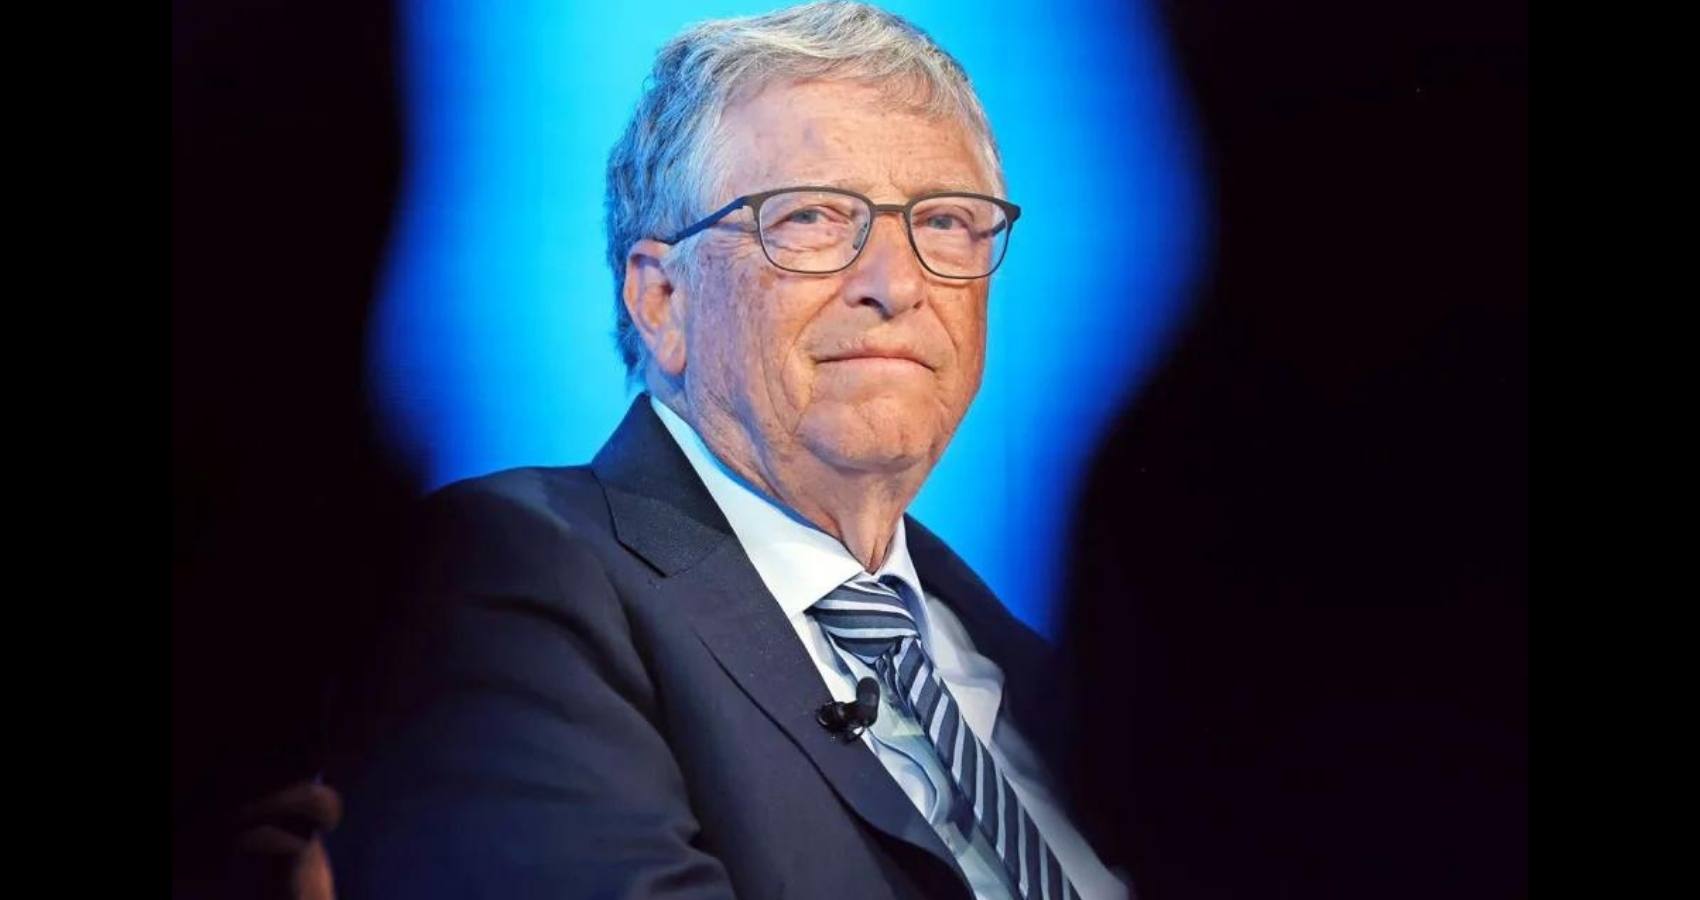 Wishing To Be Off Billionaires List, Bill Gates Donates $20 Billion To Foundation